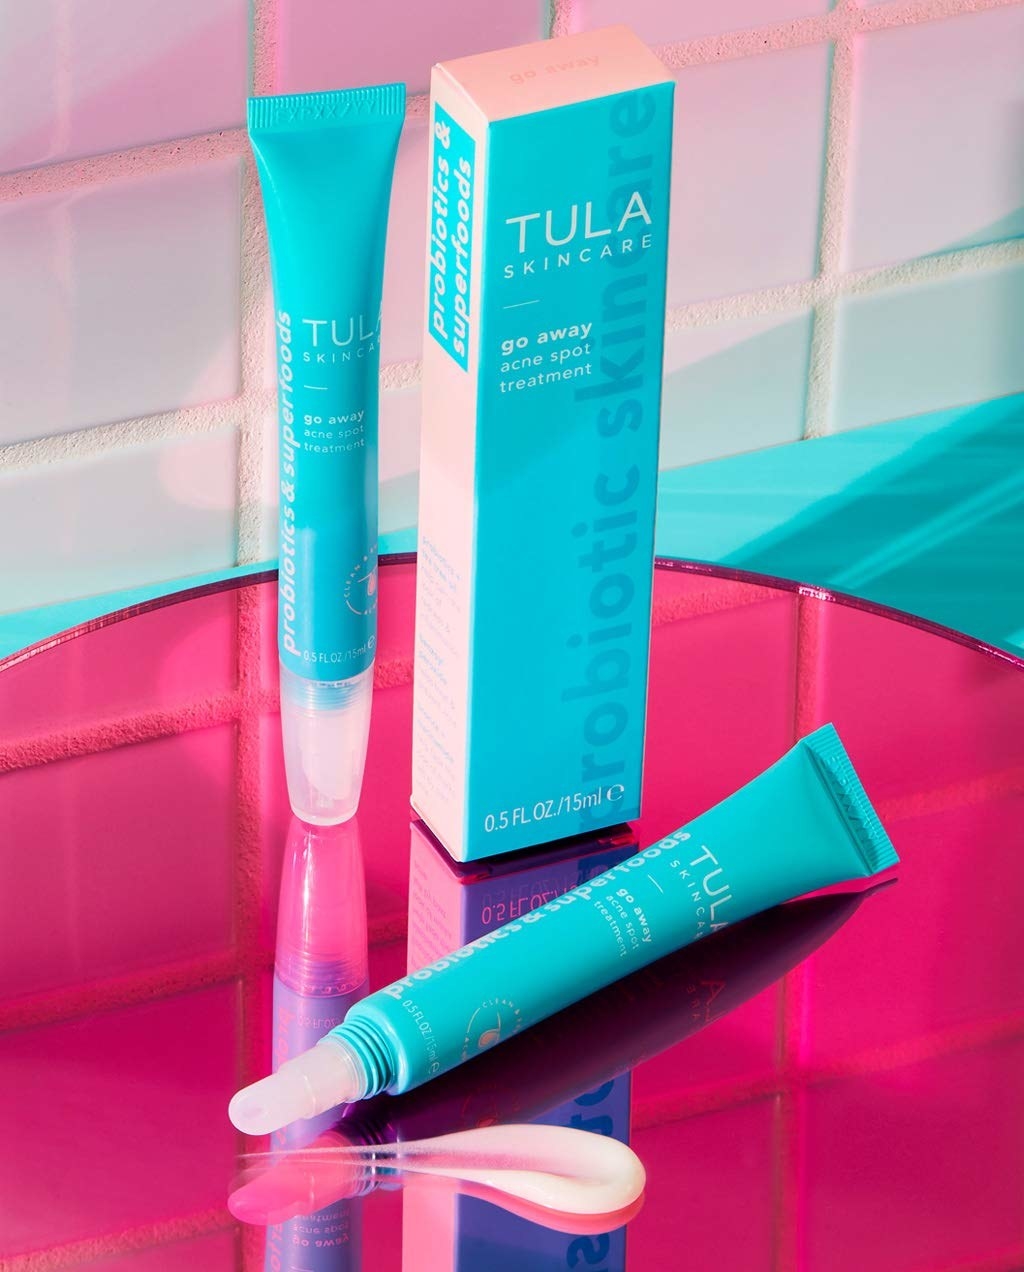 Bottles of Tula Skincare Go Away Acne Spot Treatment